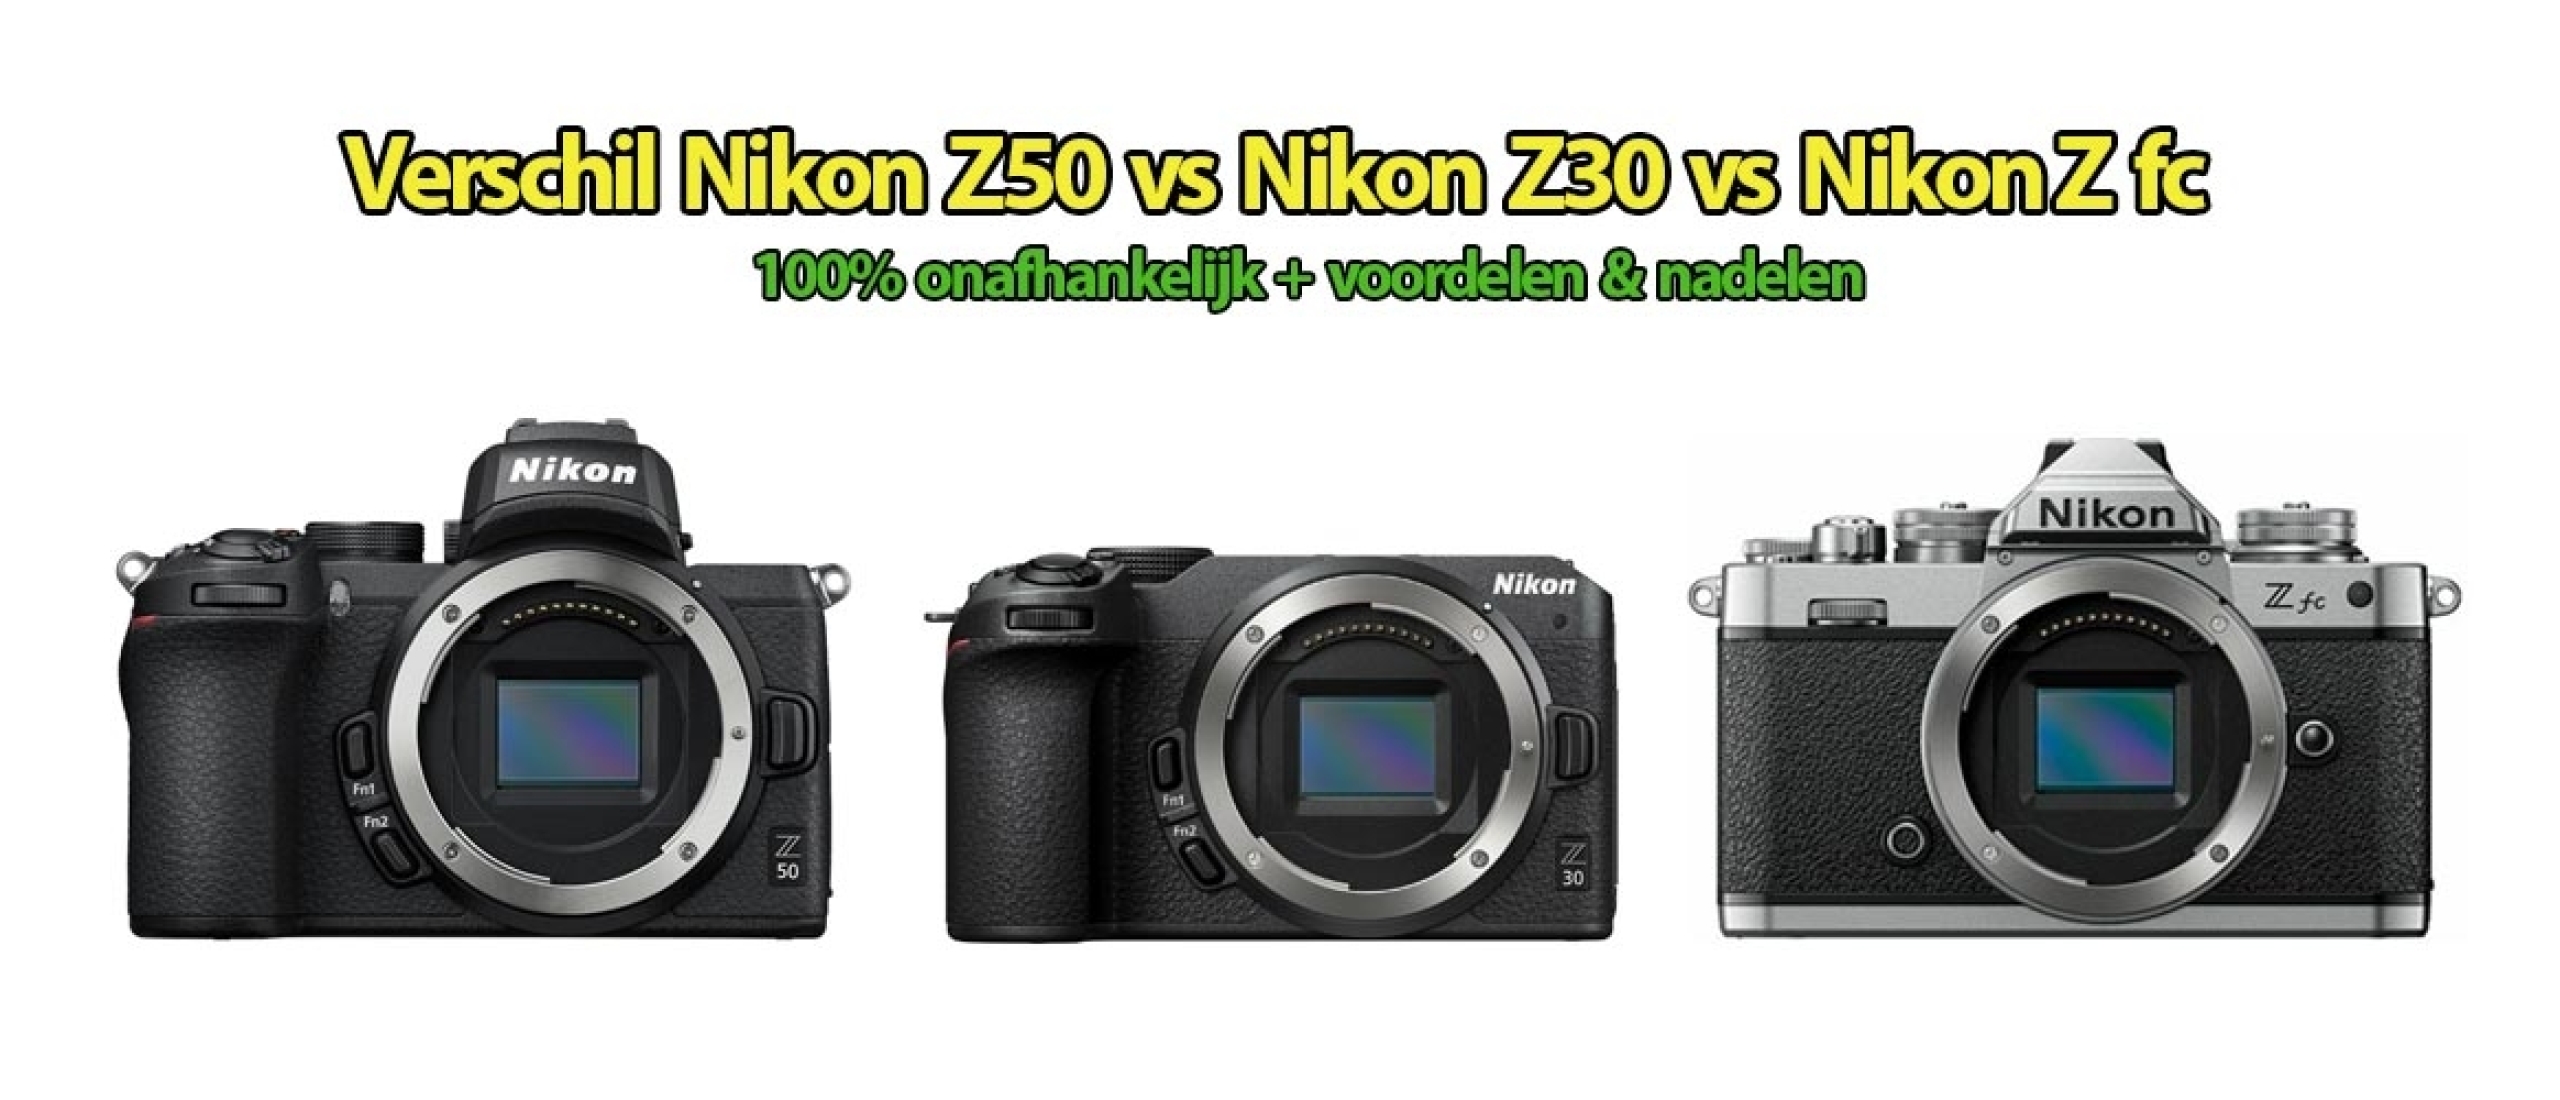 Verschil tussen de Nikon Z50, Nikon Z30 en Nikon Z fc systeemcamera